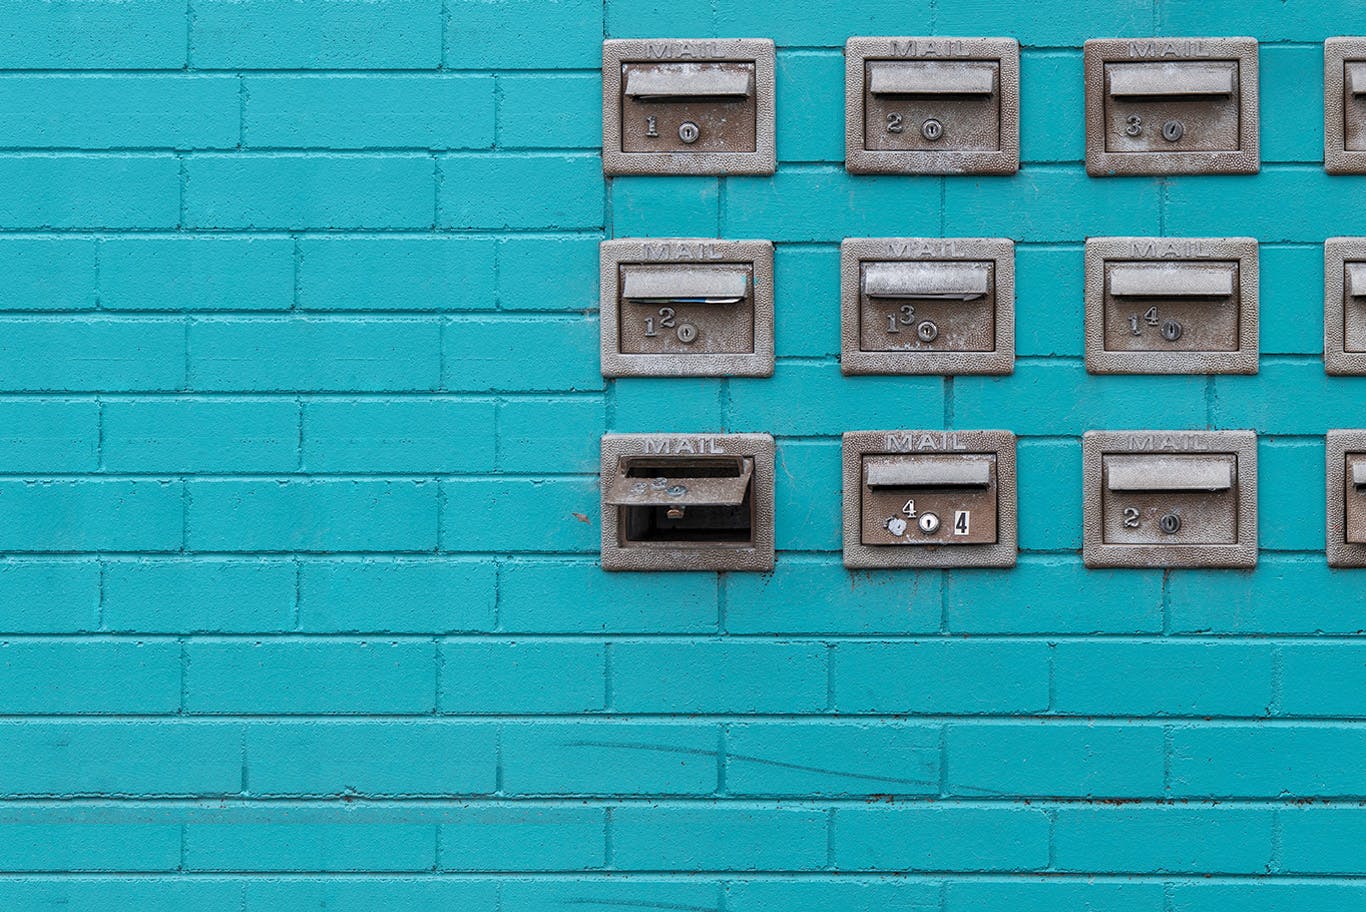 Boîtes postales contre un mur de briques bleues 